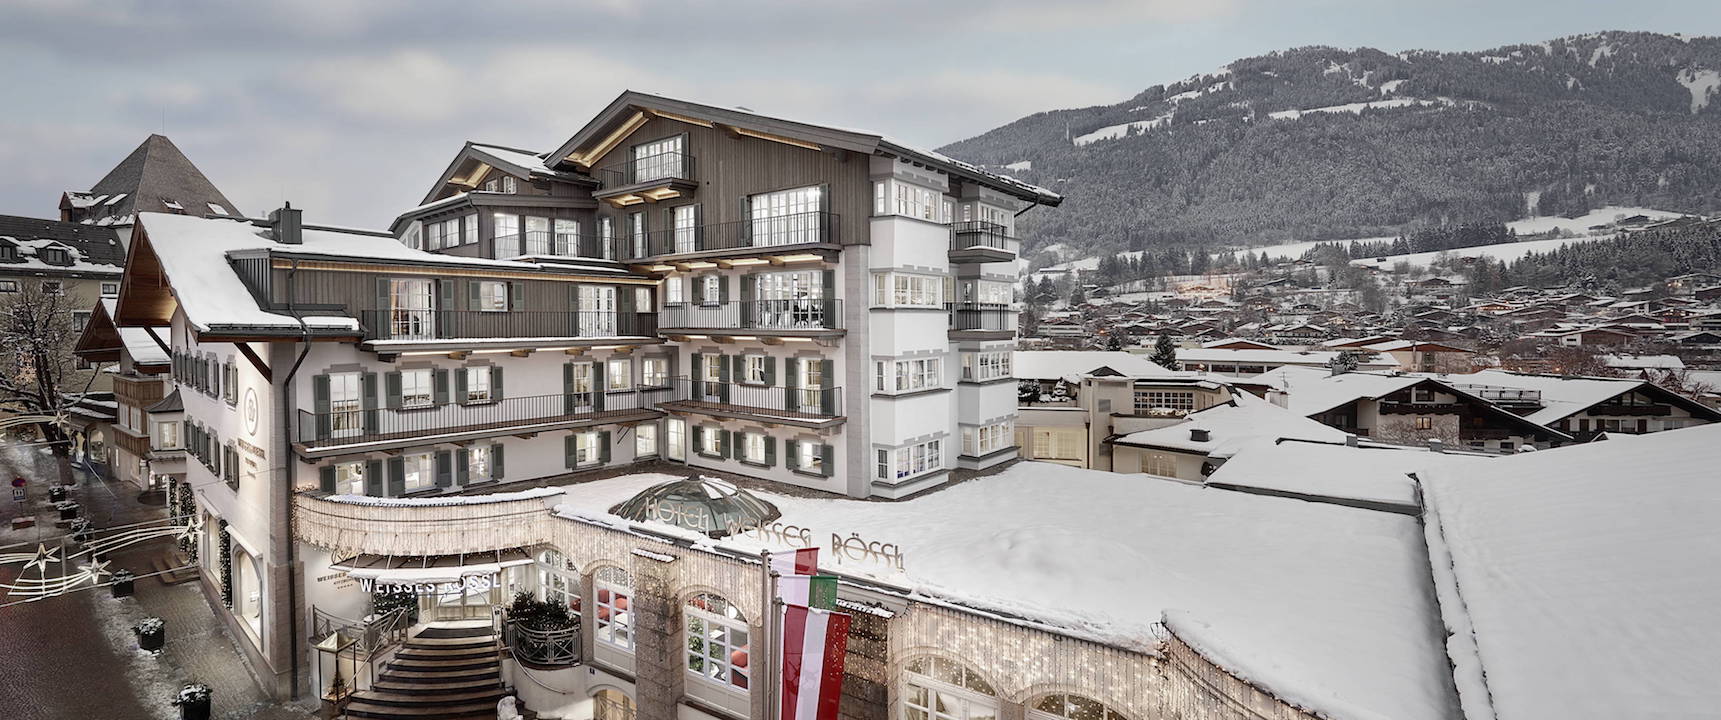 Hotel Weisses Roessl , Kitzbuehel / Austria 